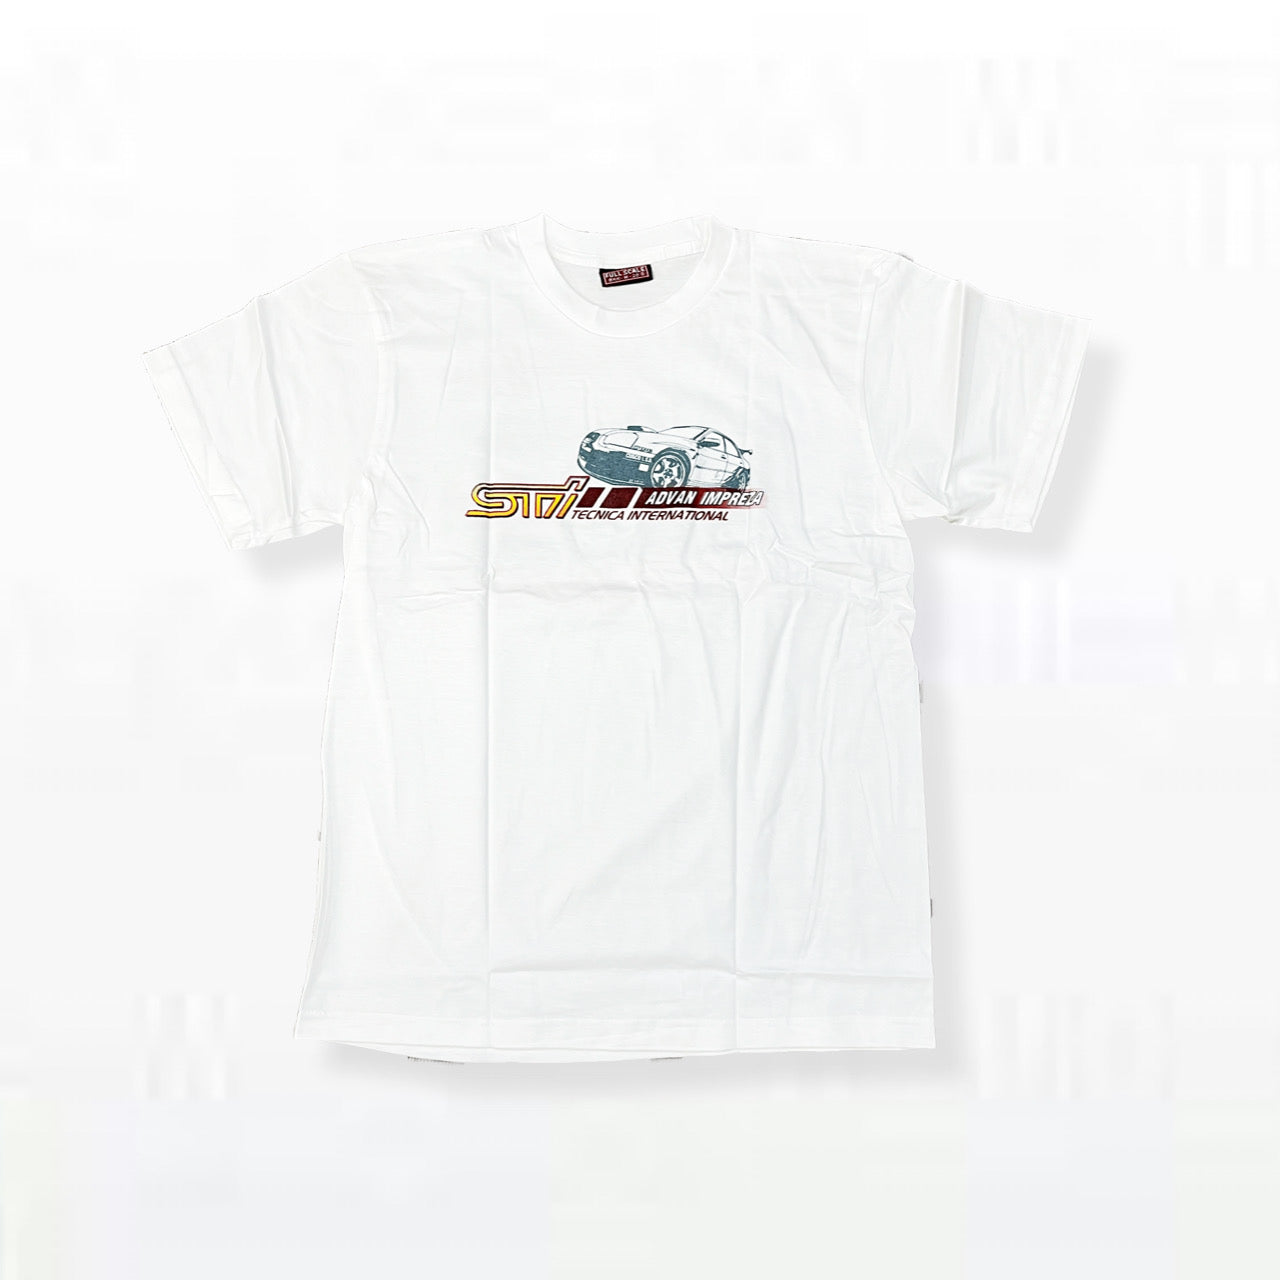 Advan Impreza Blobeye WRX STi Racing Hart Tecnica International T-shirt White